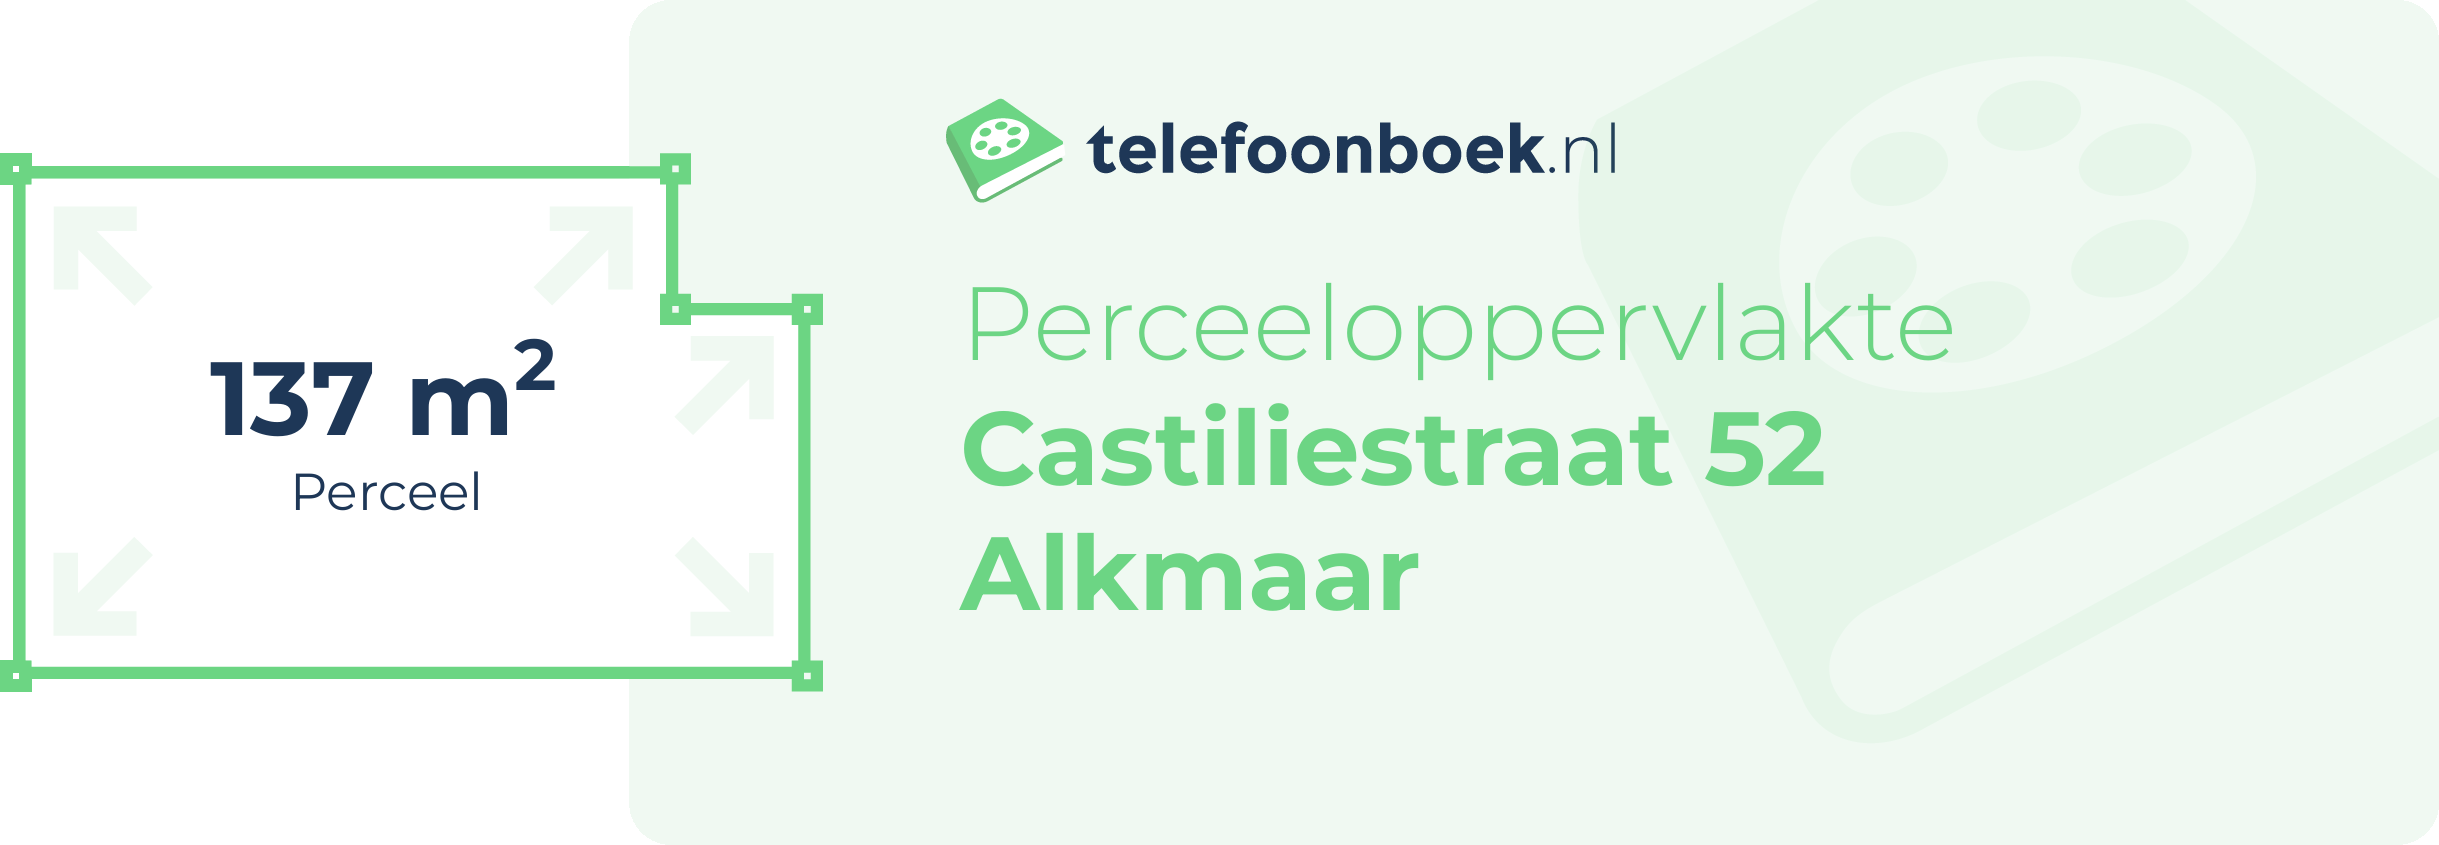 Perceeloppervlakte Castiliestraat 52 Alkmaar